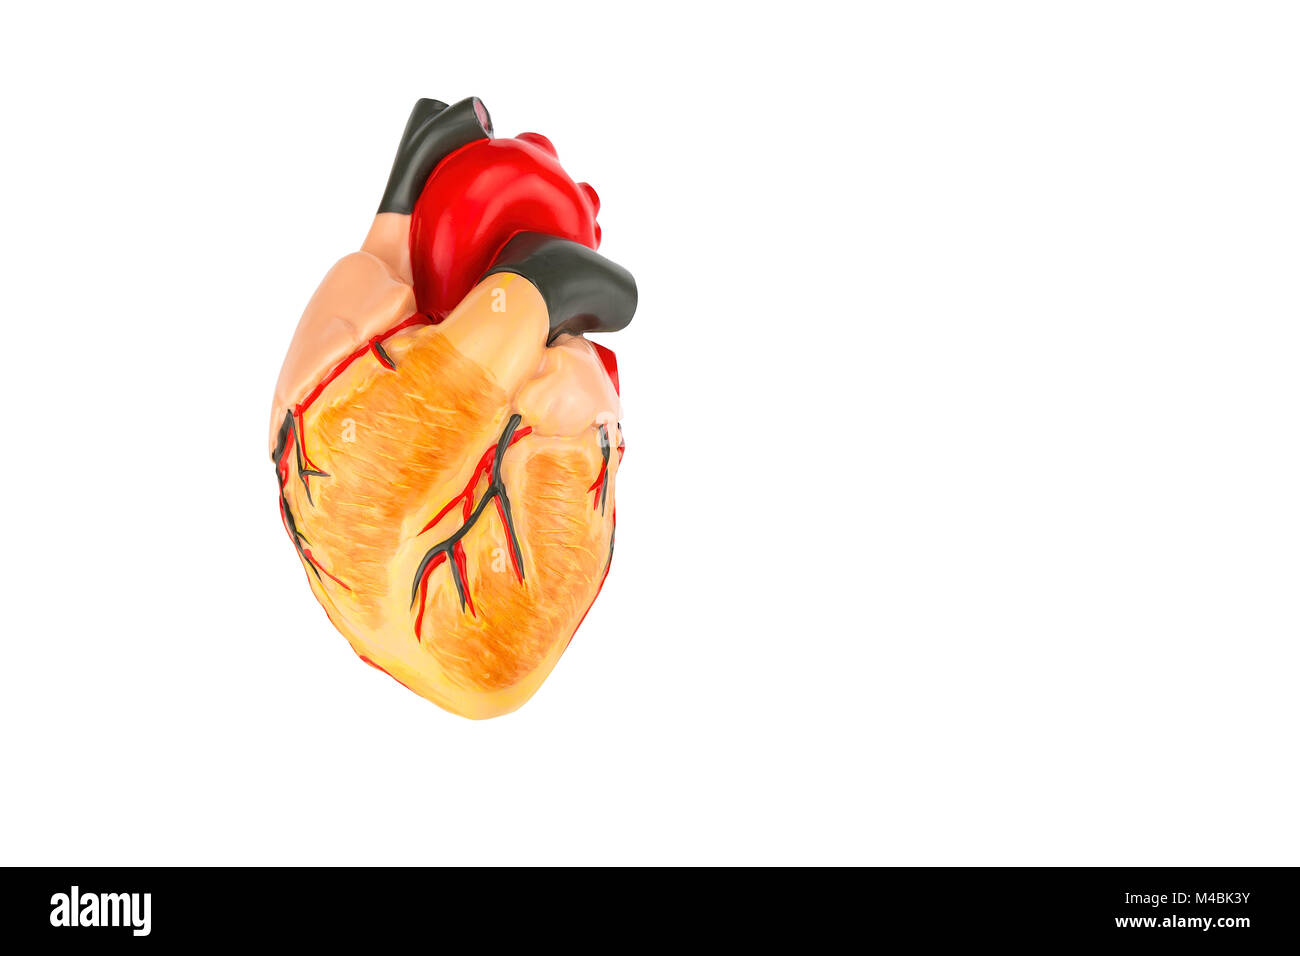 Human heart model on white background Stock Photo